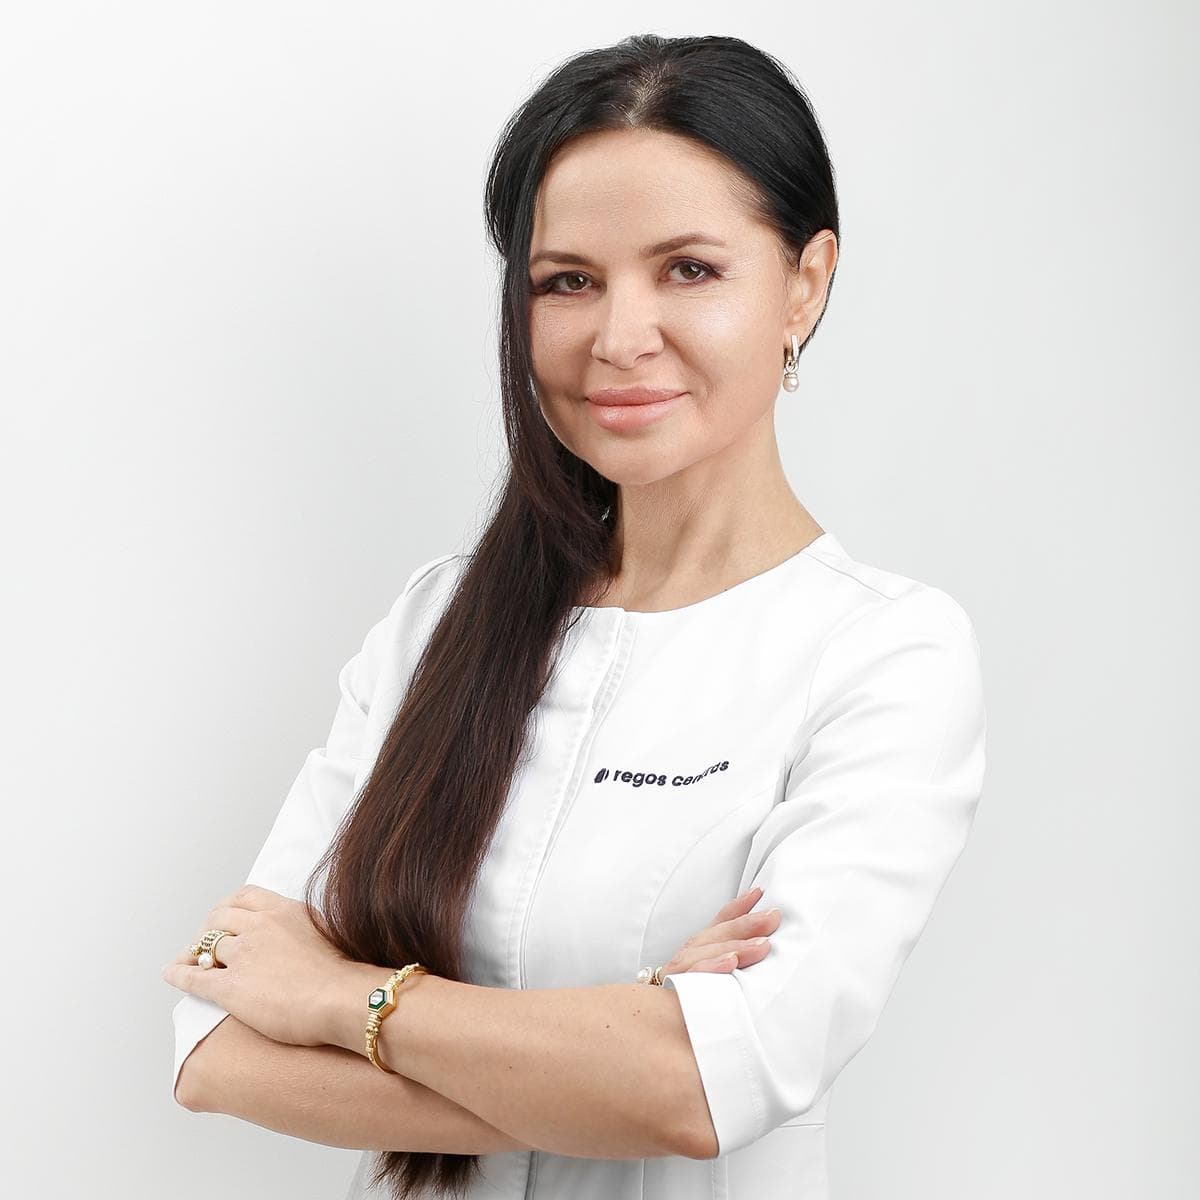 Ophthalmologist-microsurgeon Lolita Jotautienė